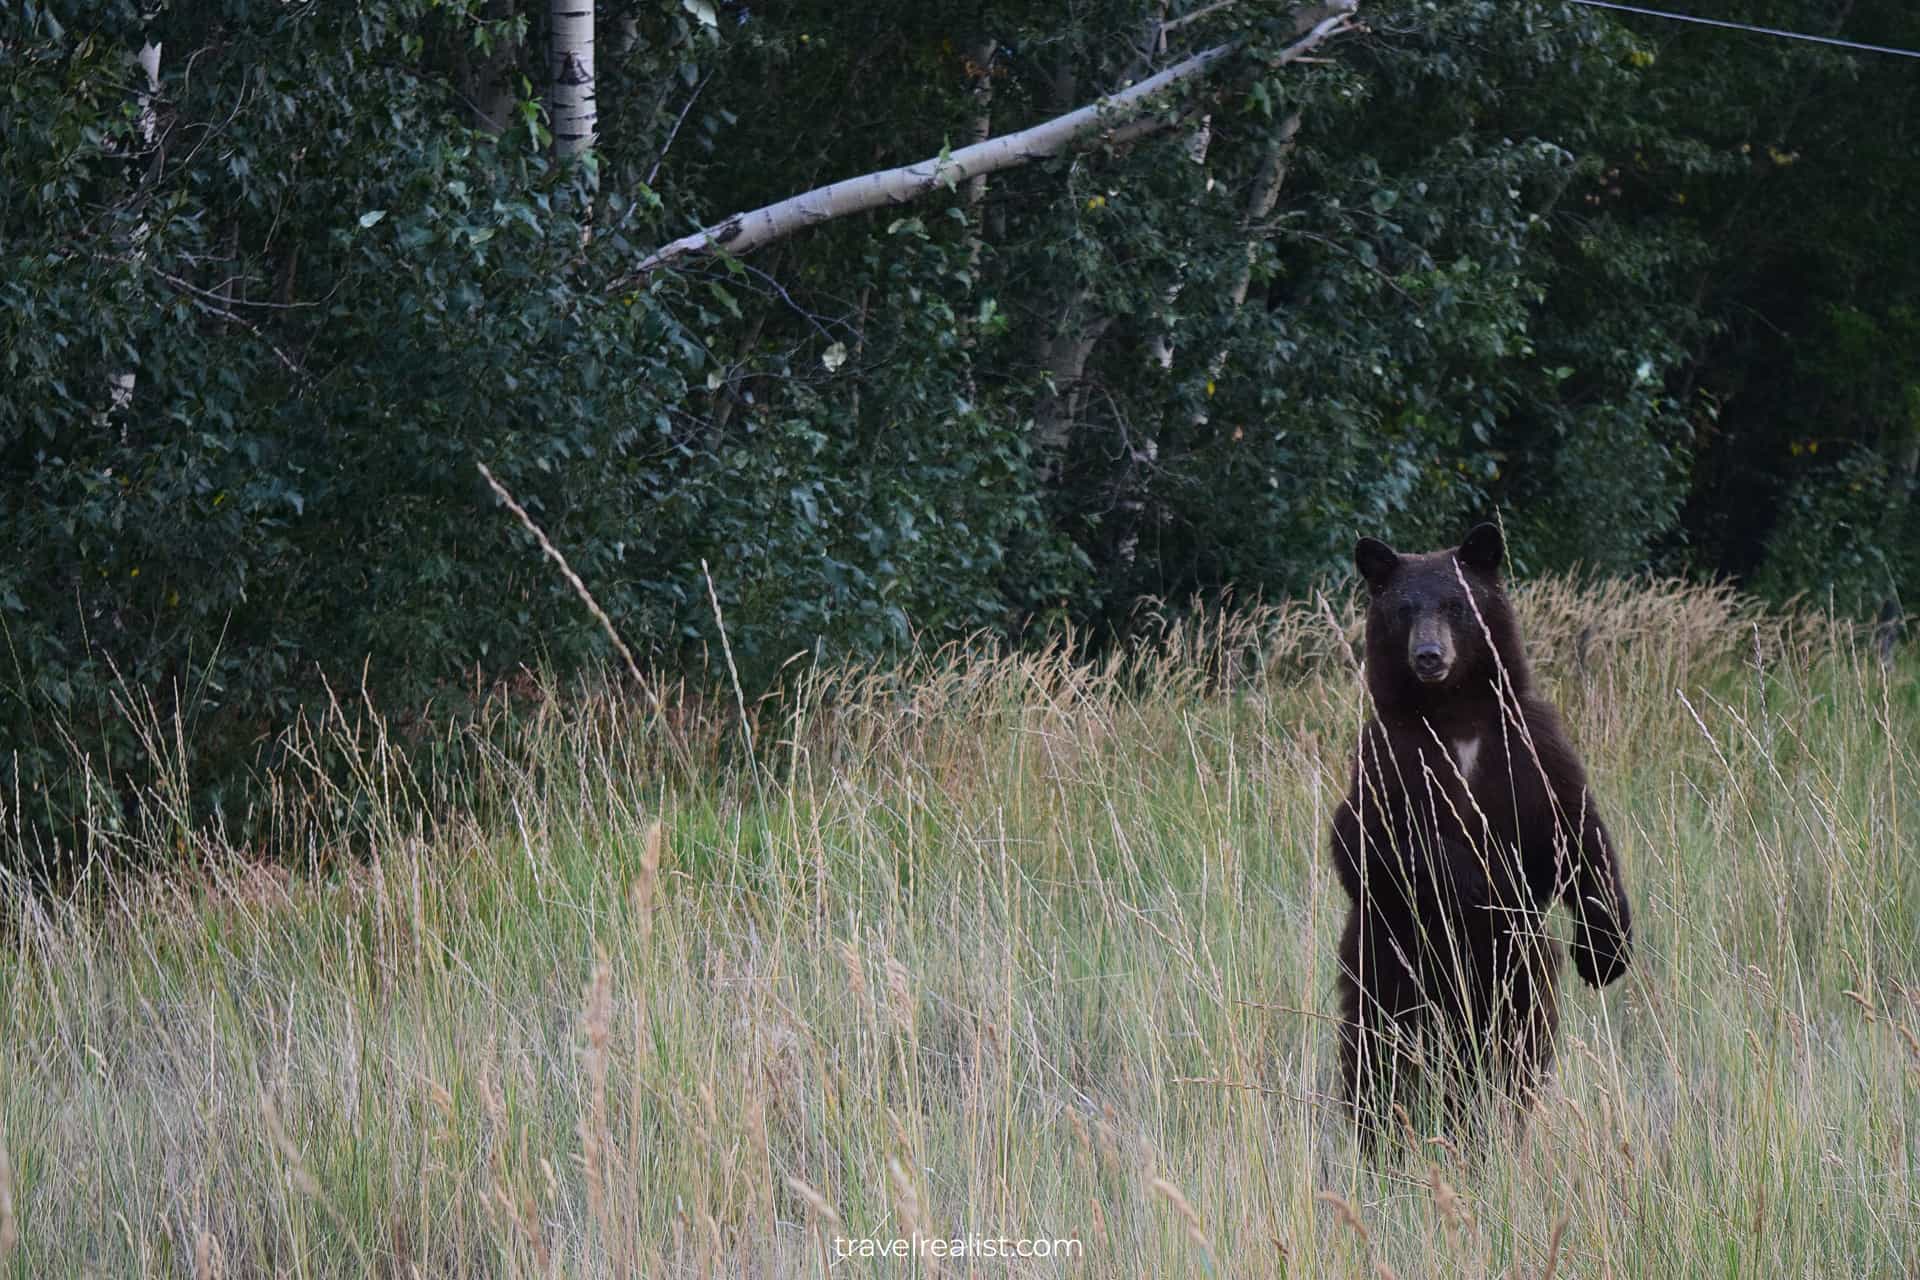 Black bear on Beartooth Highway in Montana, US